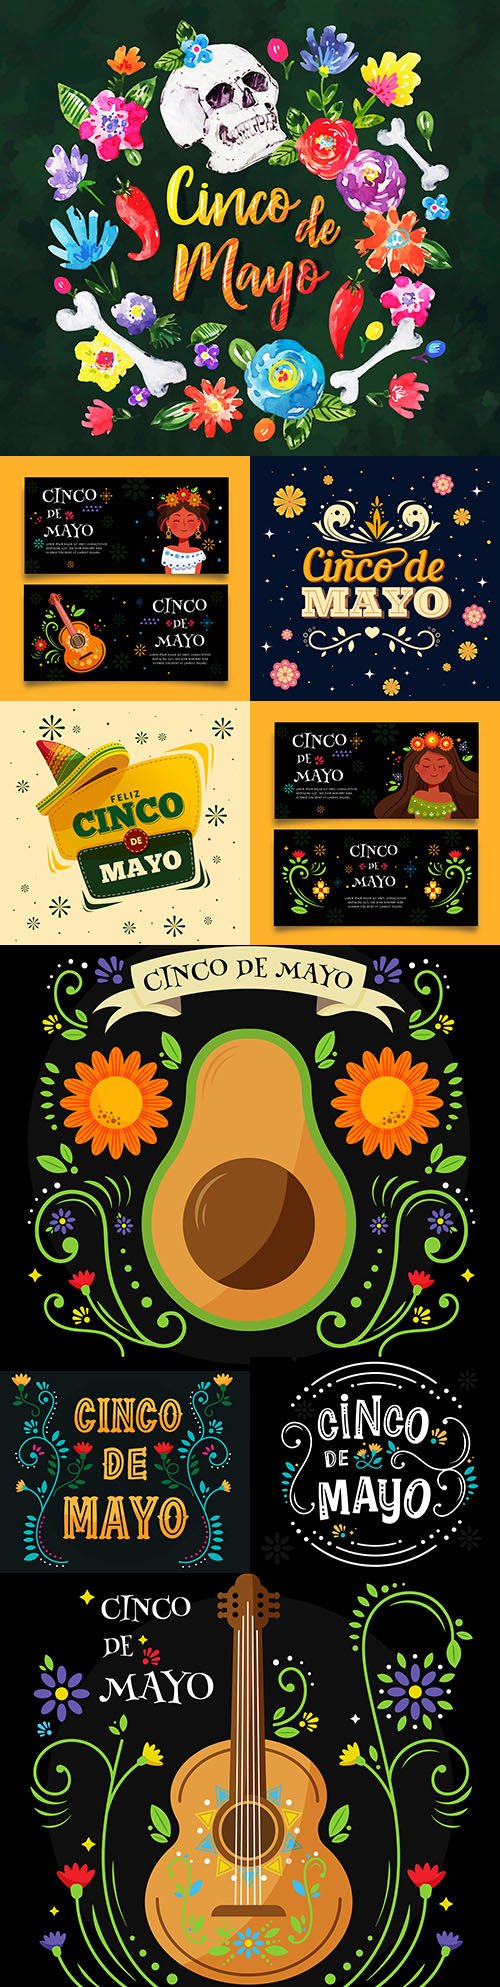 Synco de Mayo Mexican holiday premium illustration 3